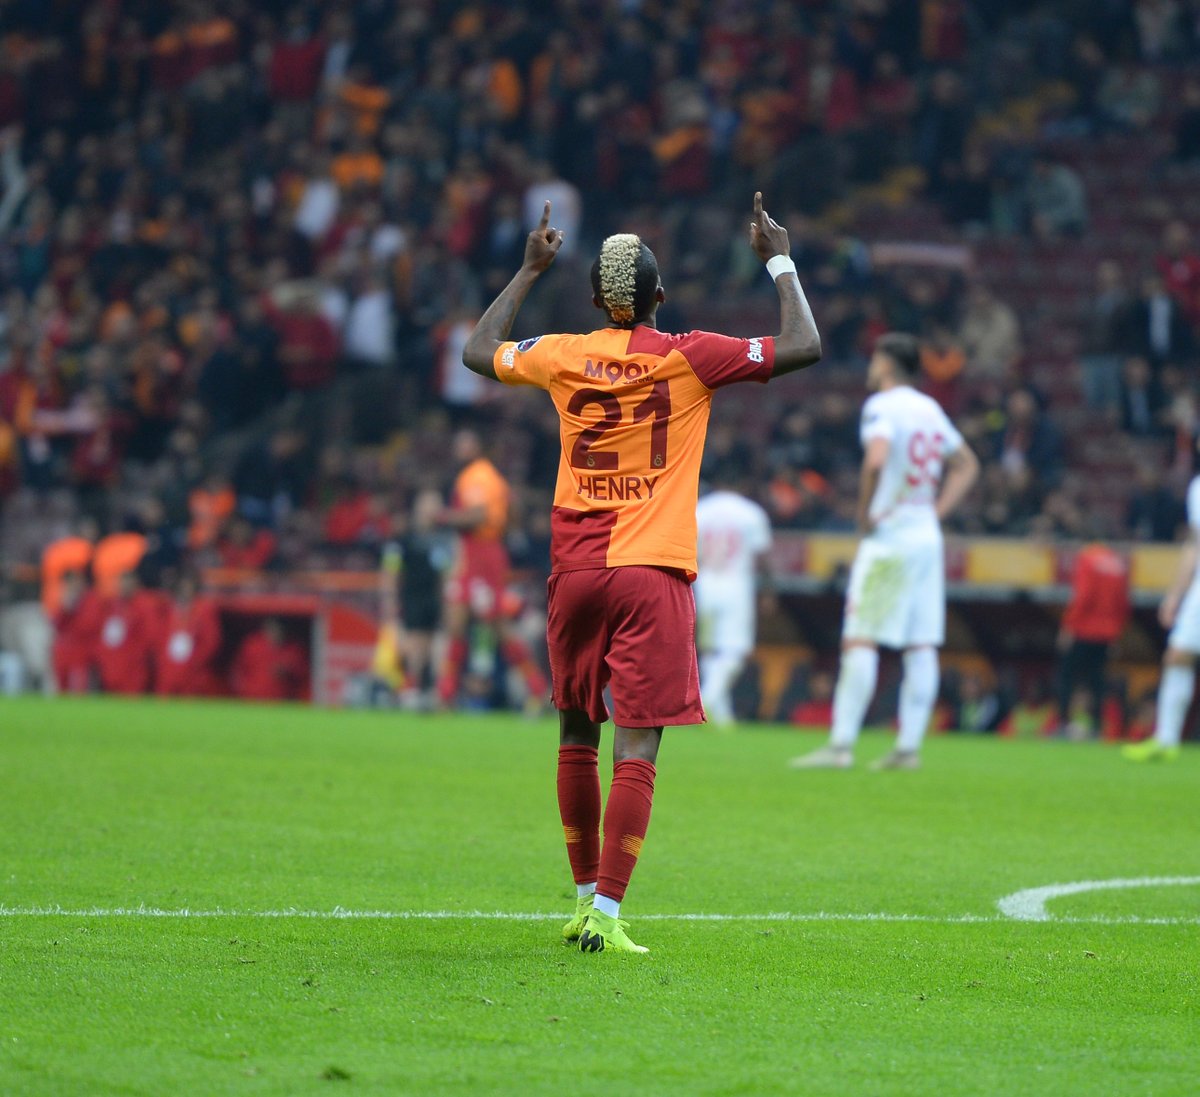 Henry Onyekuru is currently on loan at Galatasaray [Twitter/Galatasaray]